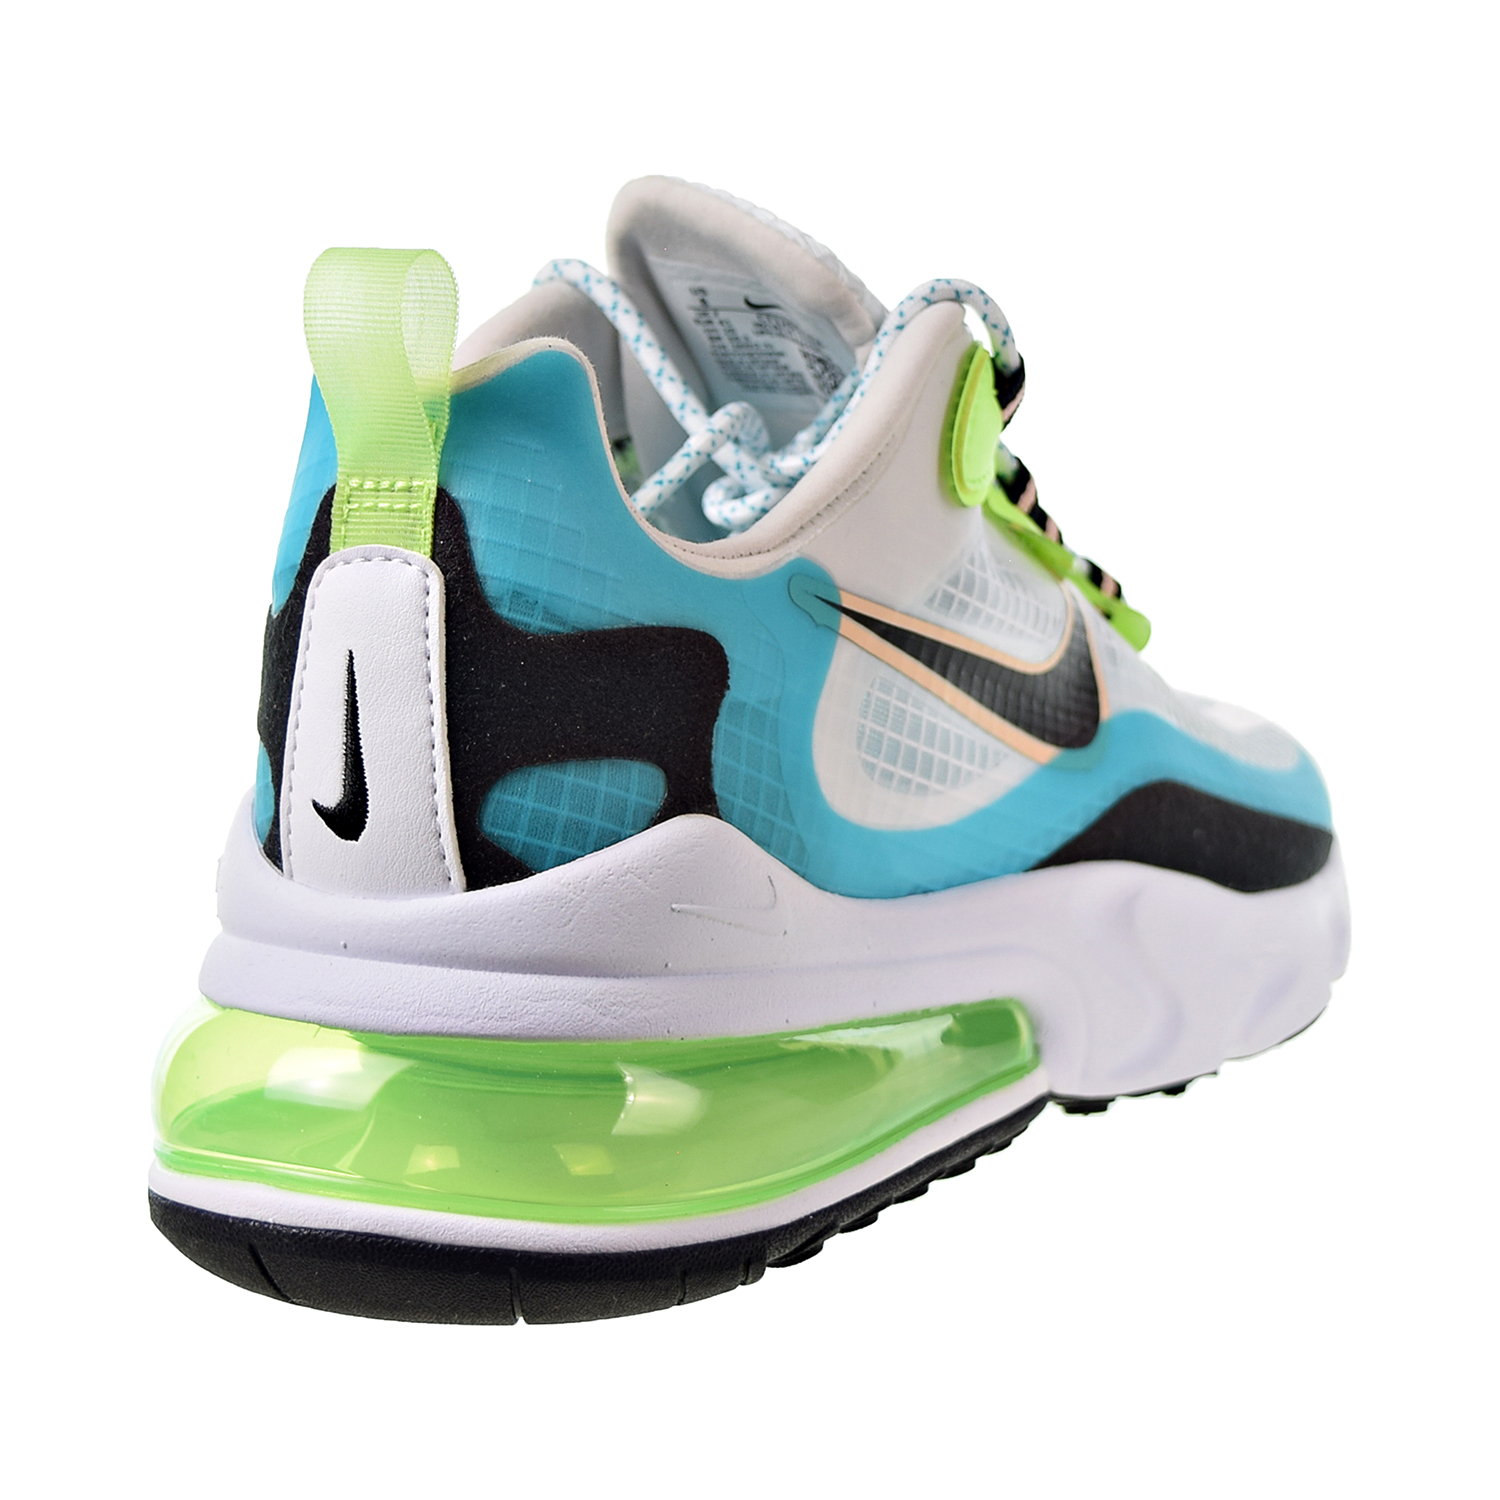 Nike Air Max 270 React SE Men's Shoes Oracle Aqua-Black-Ghost Green ct1265-300 - image 3 of 6